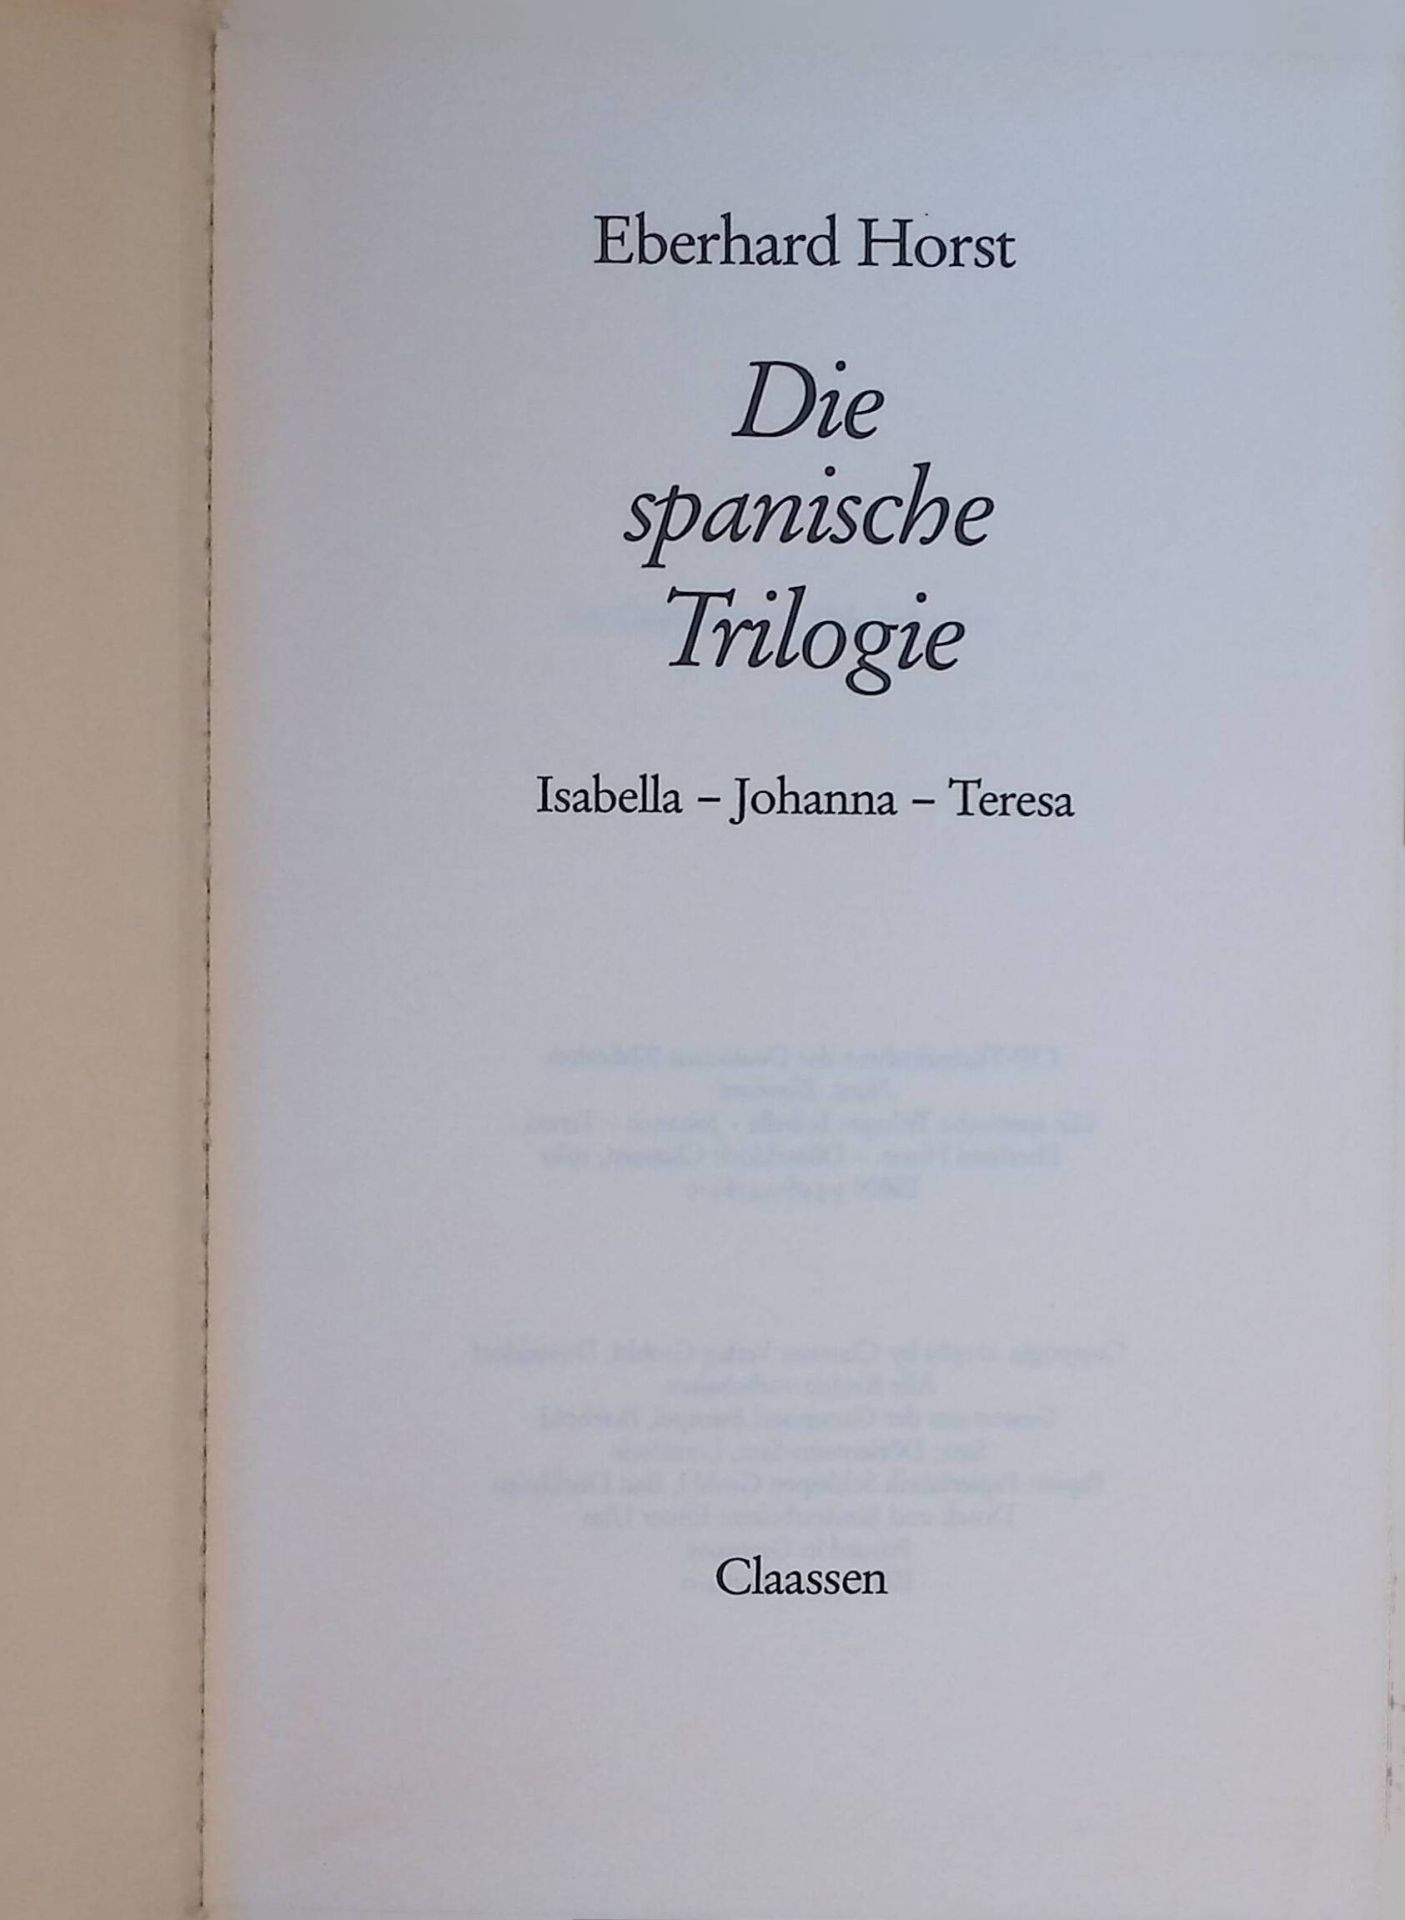 Die spanische Trilogie : Isabella - Johanna - Teresa. - Horst, Eberhard